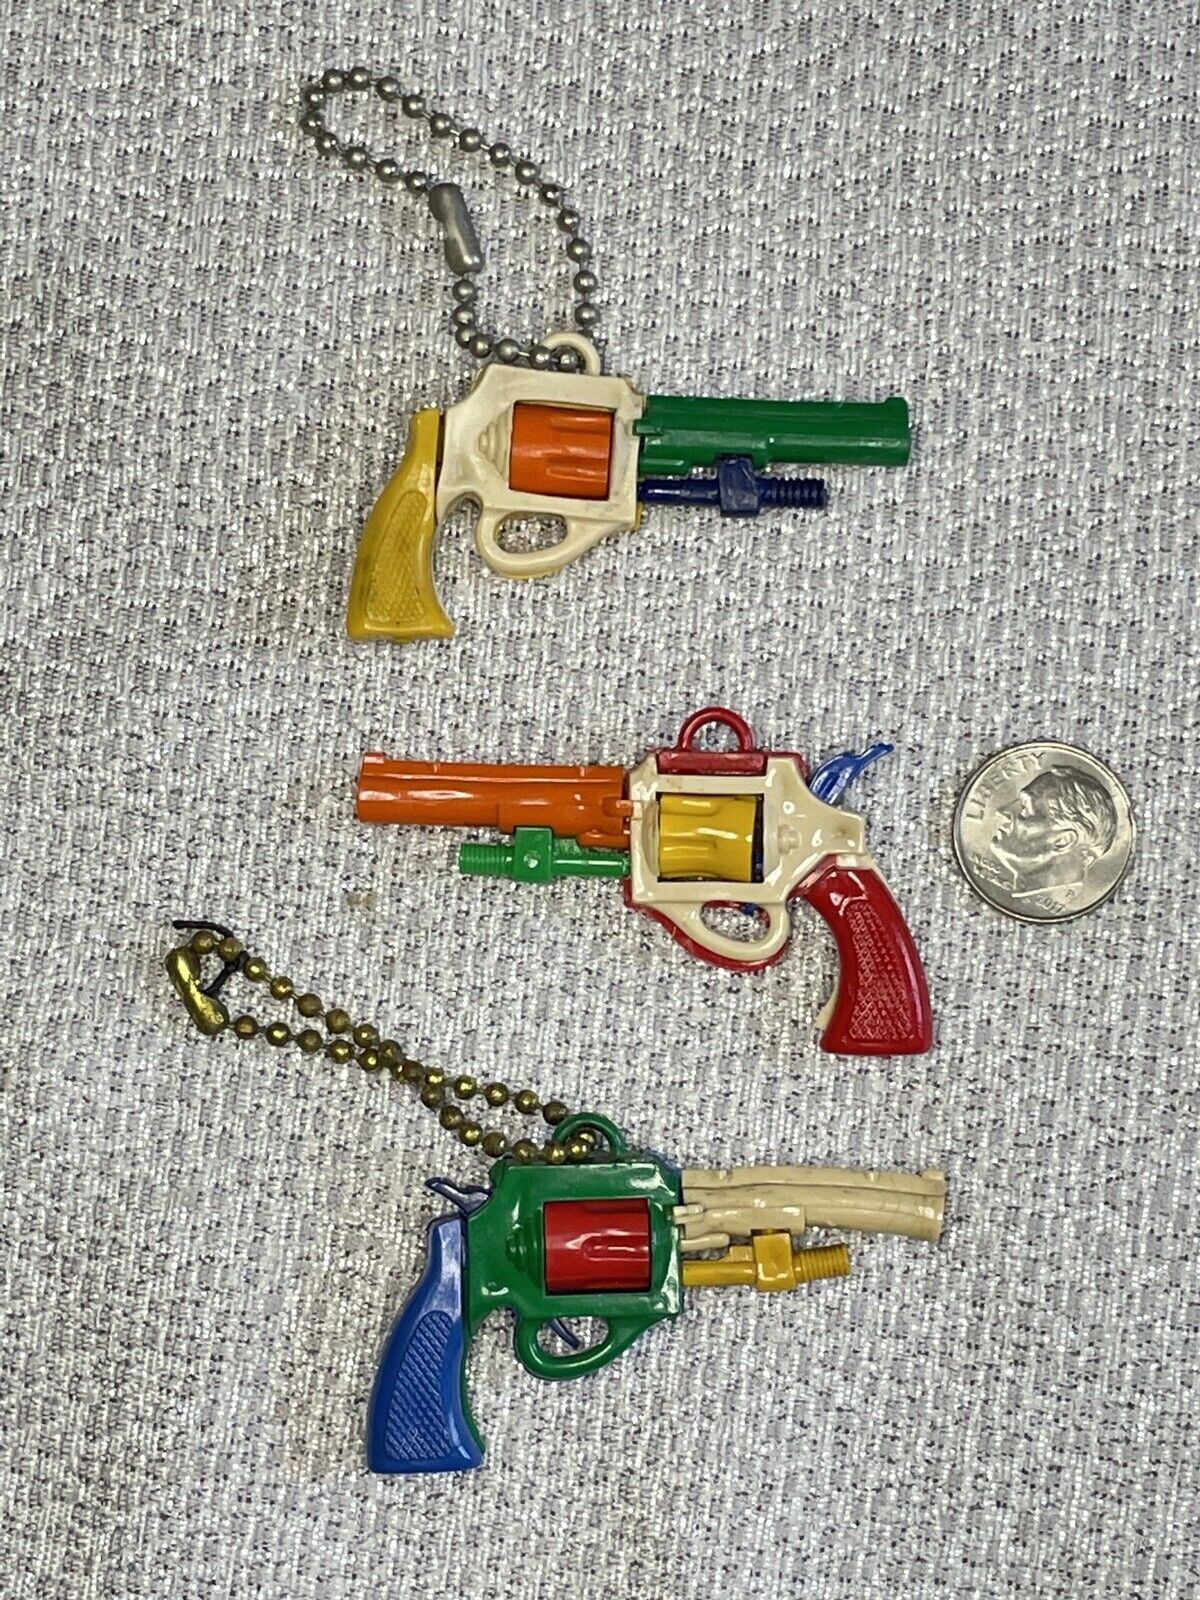 3 Vintage Plastic Puzzle Keychain TOY - PISTOL/Revolvers See Photos